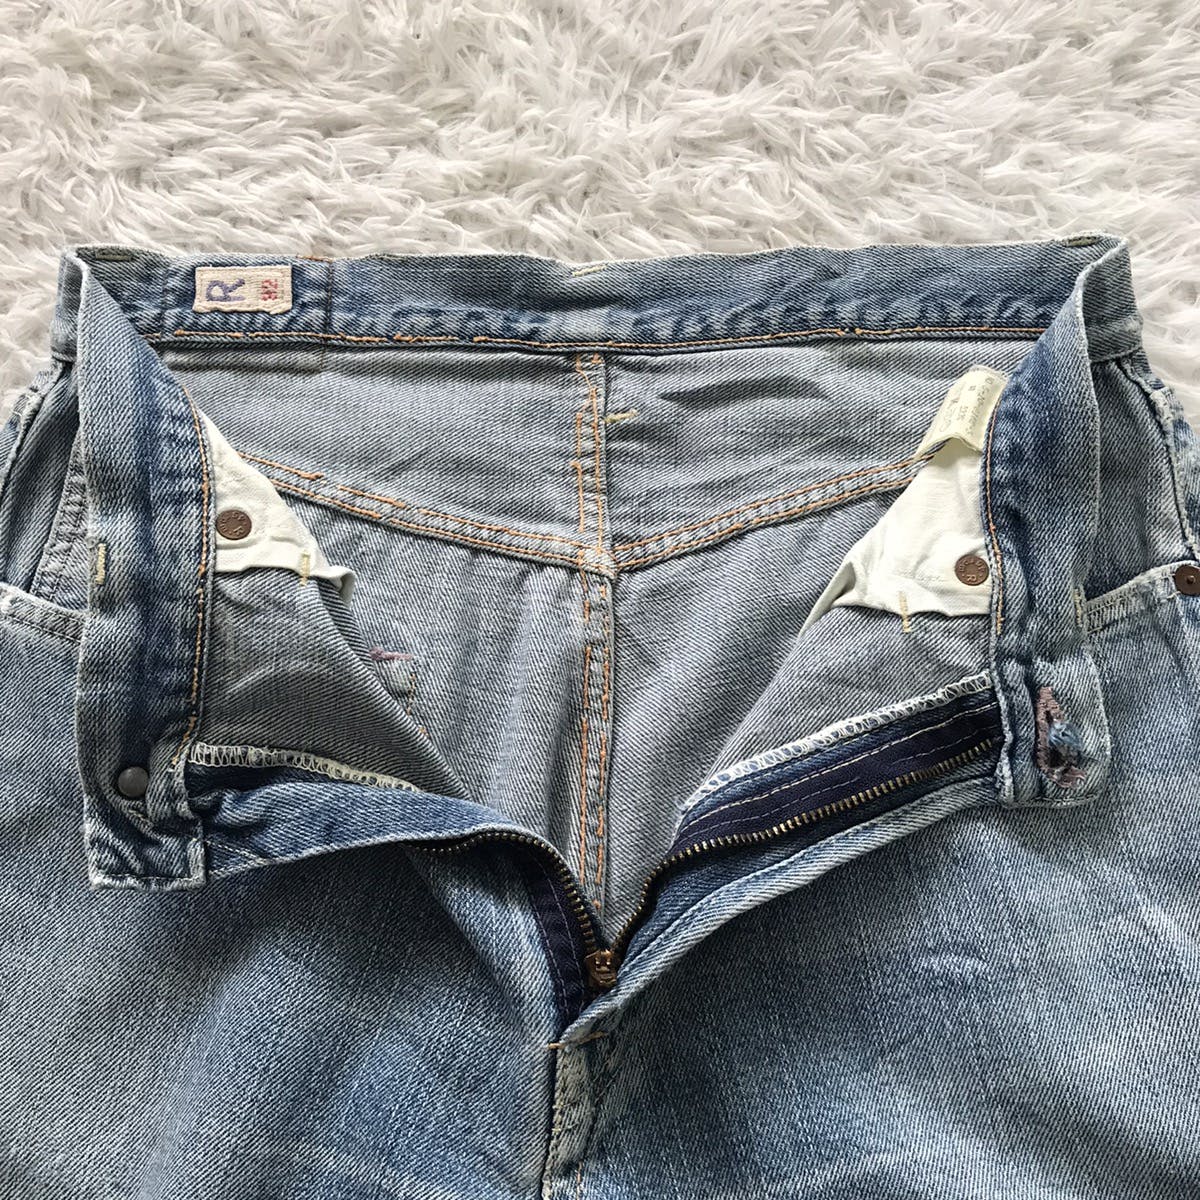 45rpm - Distress R 45 Rpm Denim Jeans Pant - 18